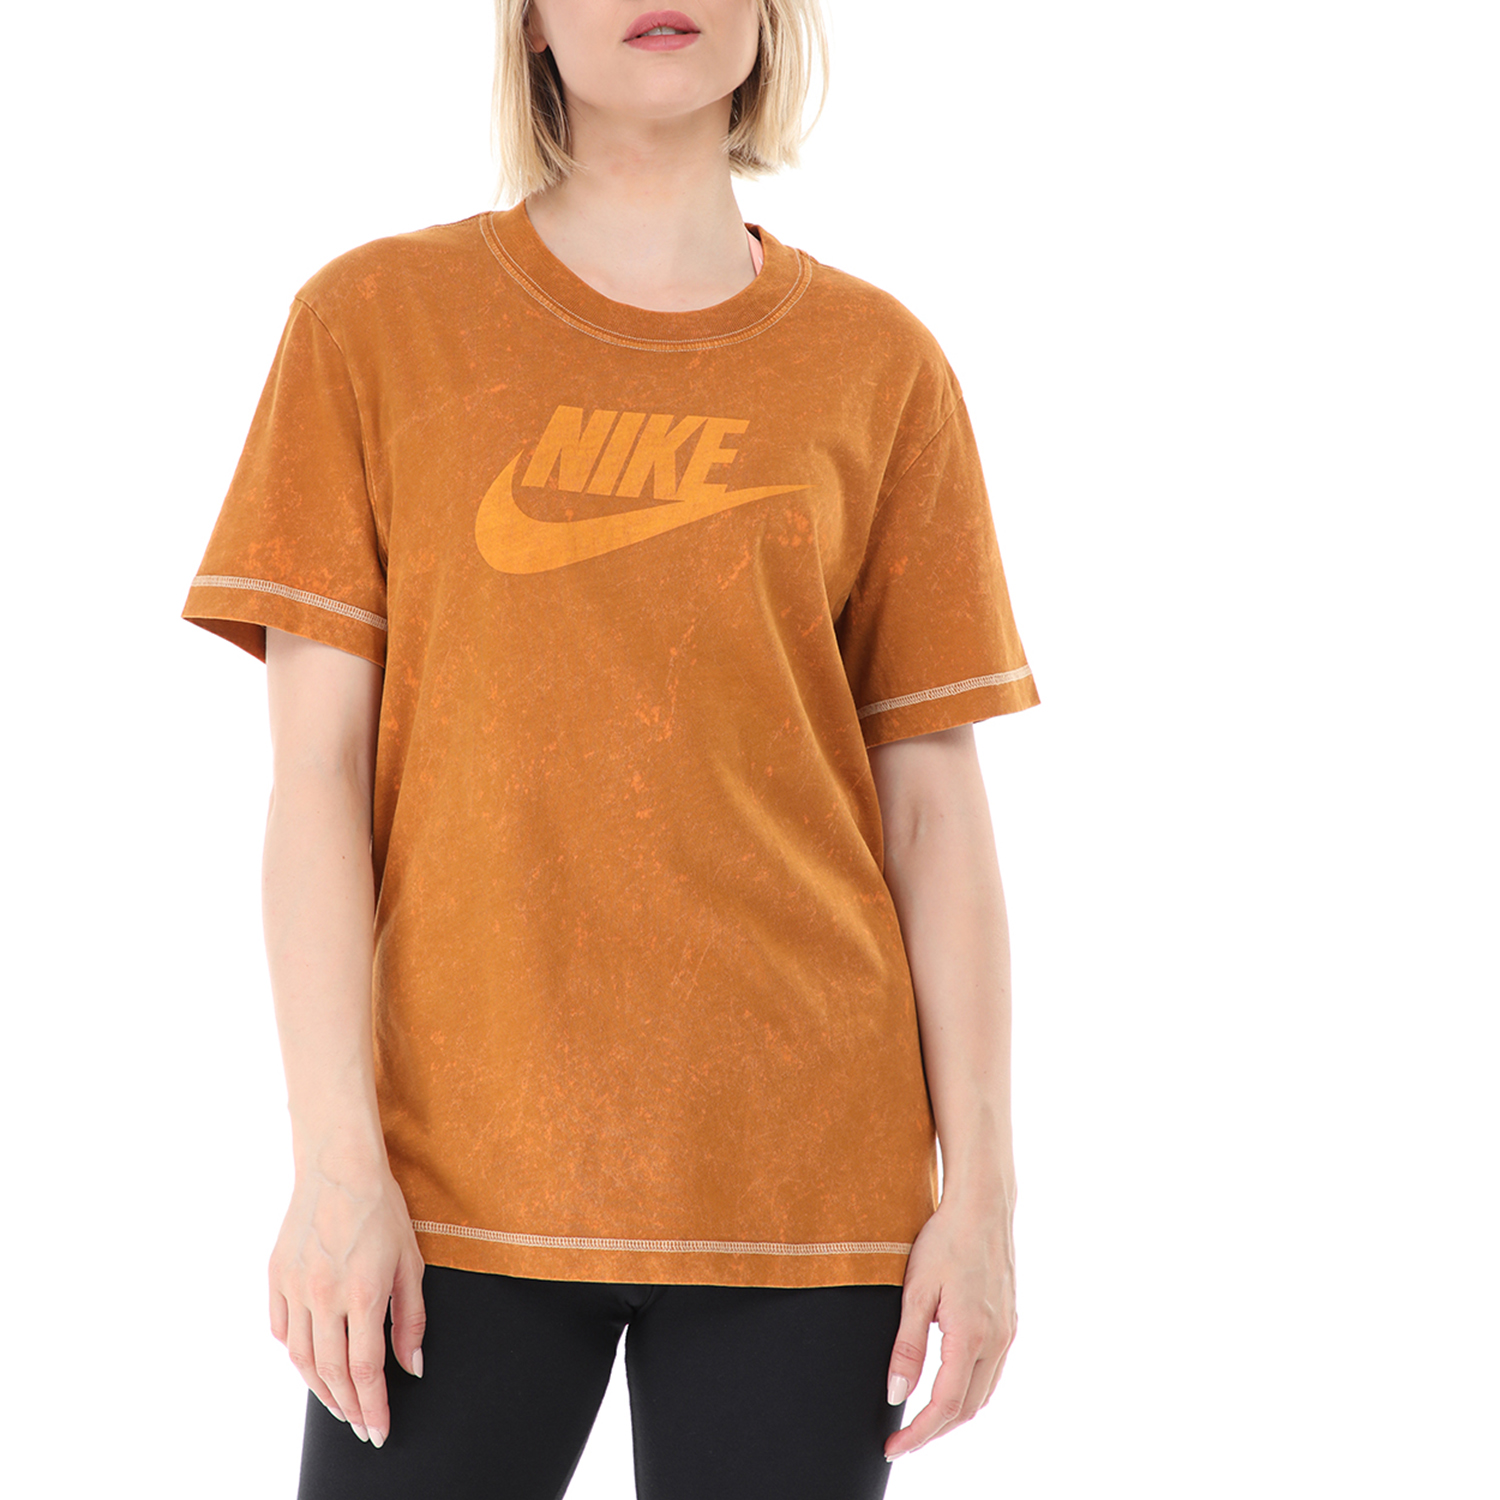 NIKE - Γυναικείο αθλητικό t-shirt NIKE NSW SS TOP REBEL καφέ Γυναικεία/Ρούχα/Αθλητικά/T-shirt-Τοπ